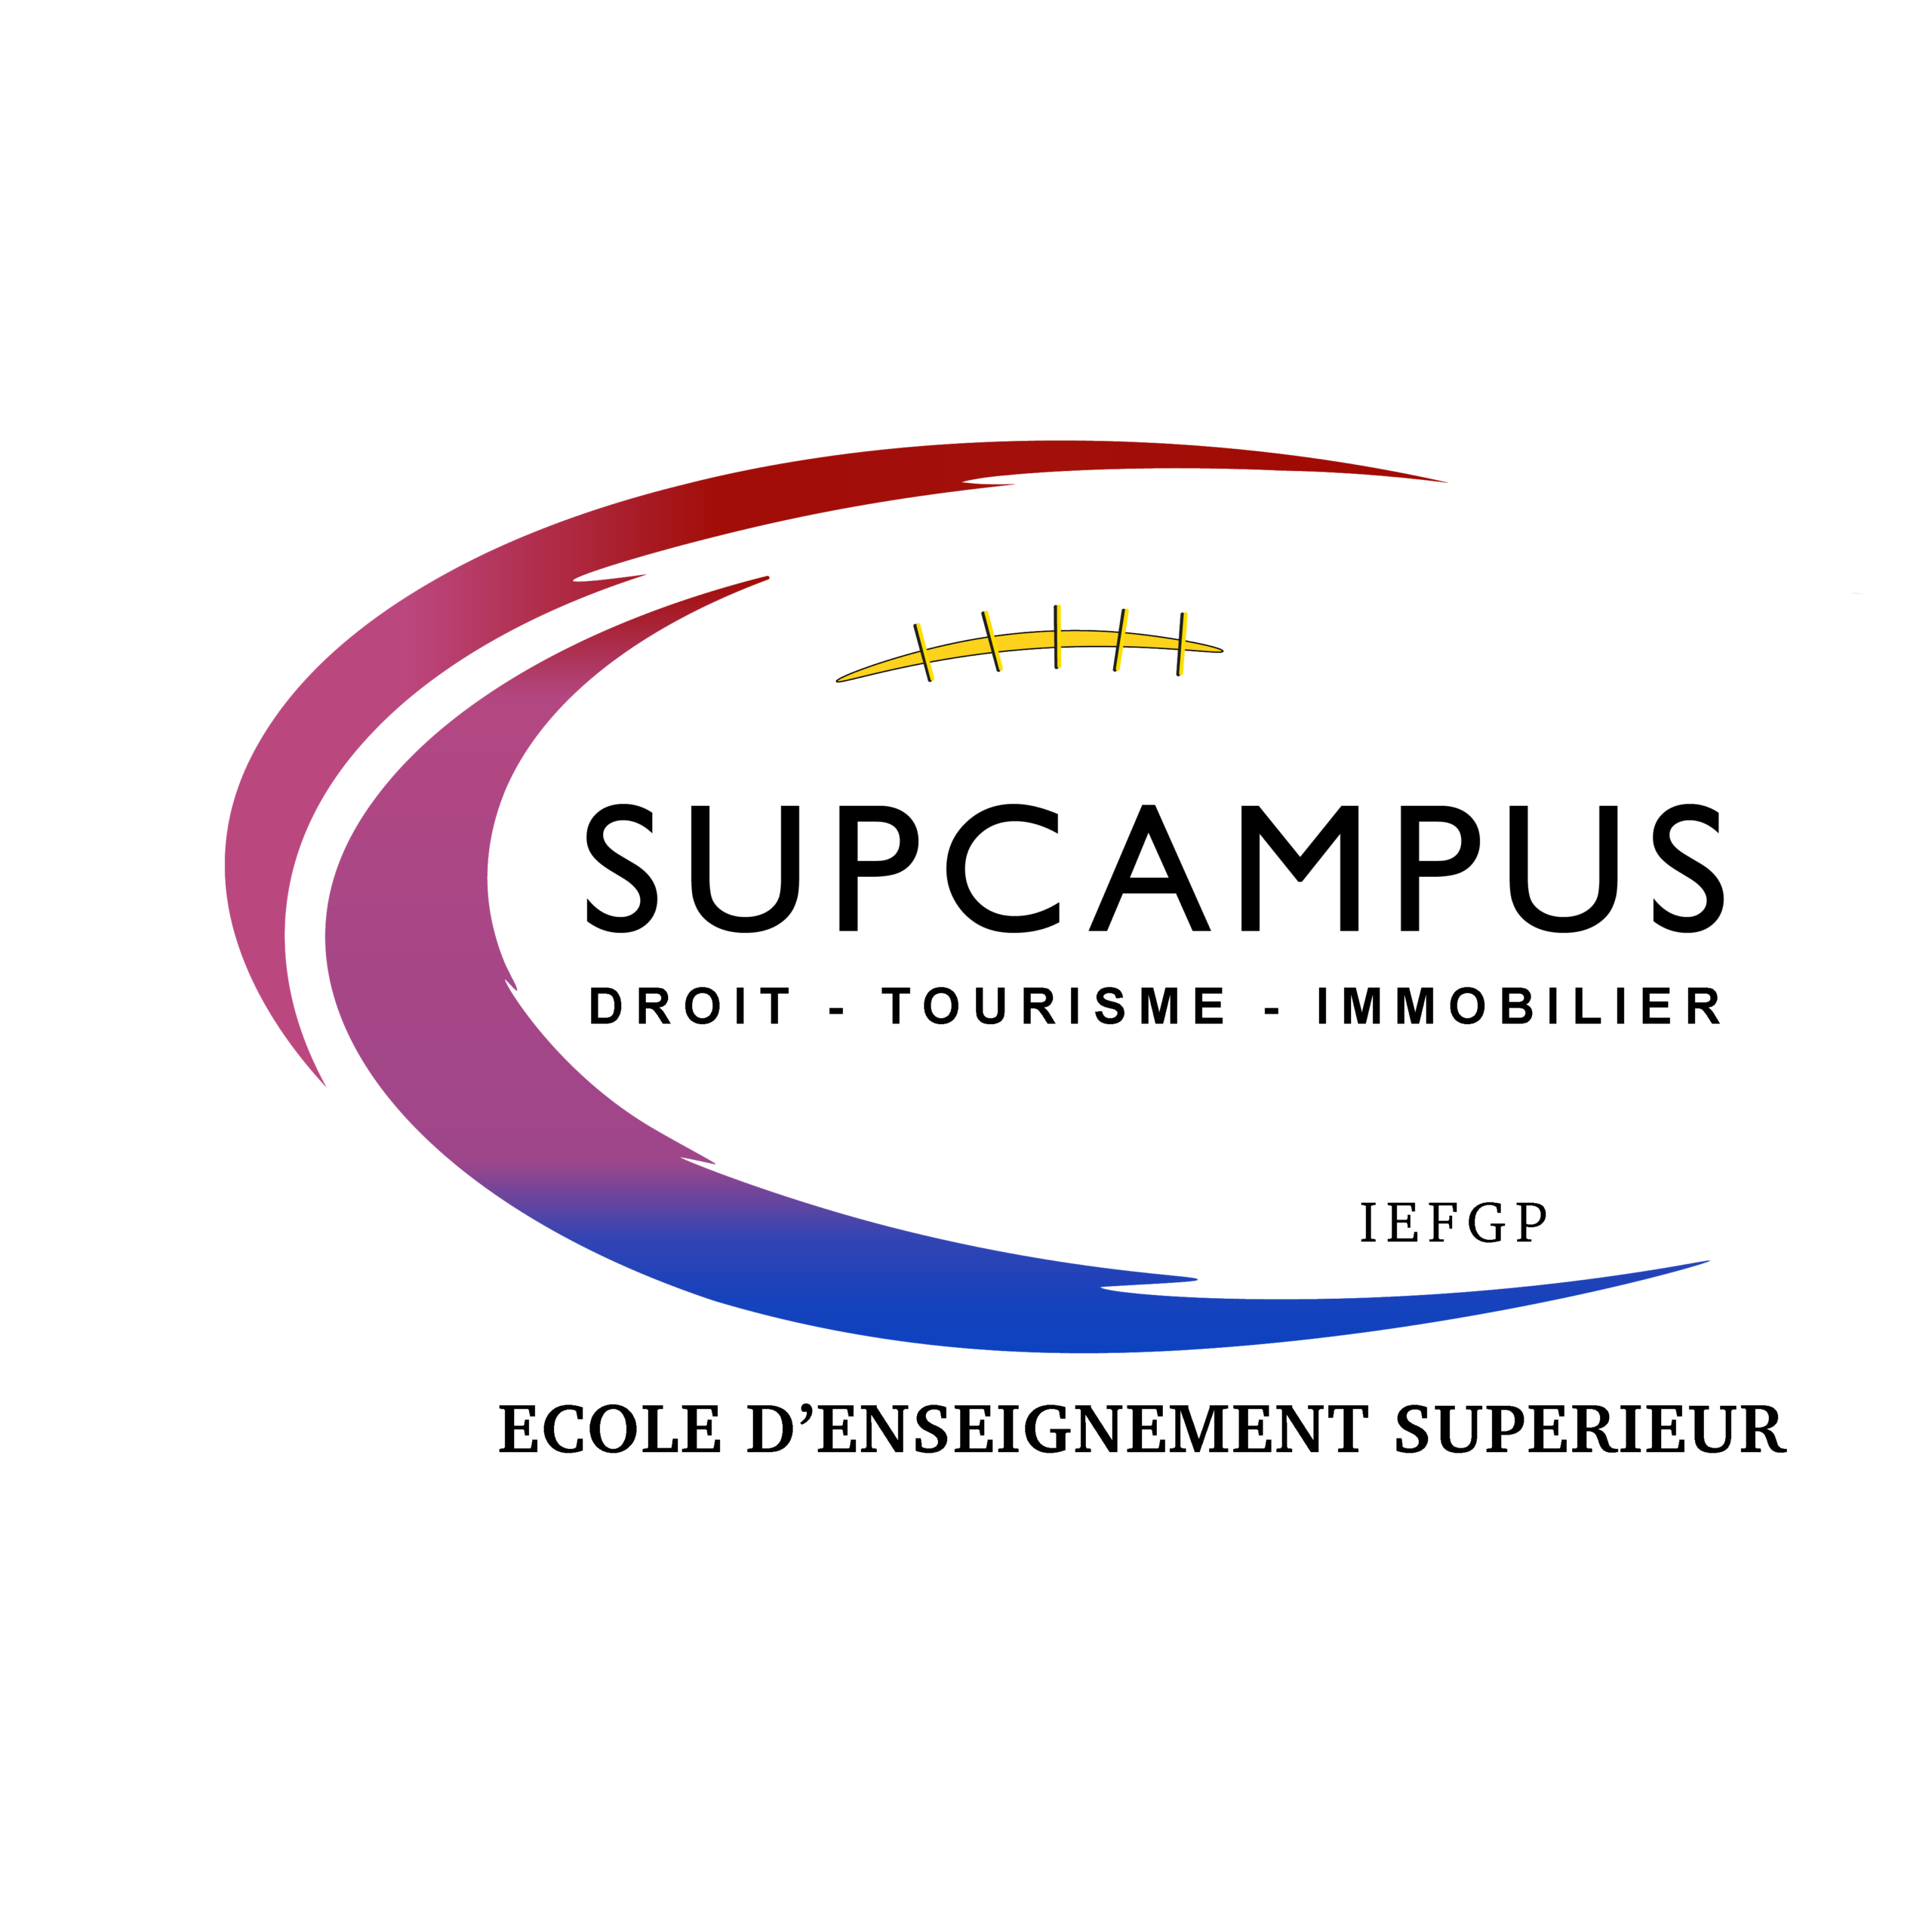 SUBCAMPUS logo